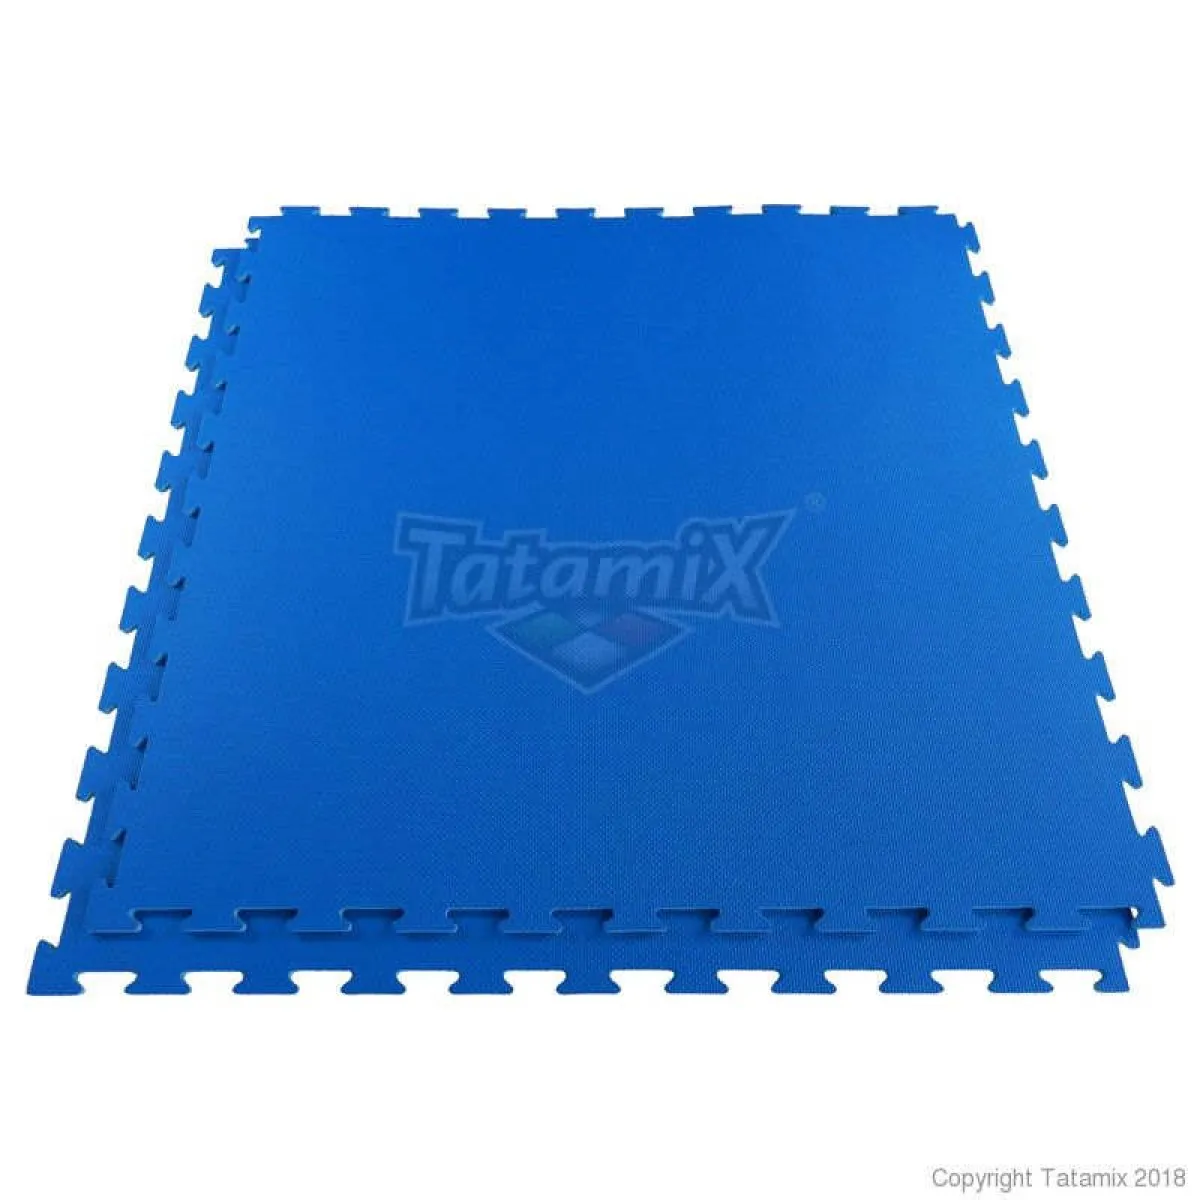 Tatamix R10X mat blue 100 cm x 100 cm x 1 cm